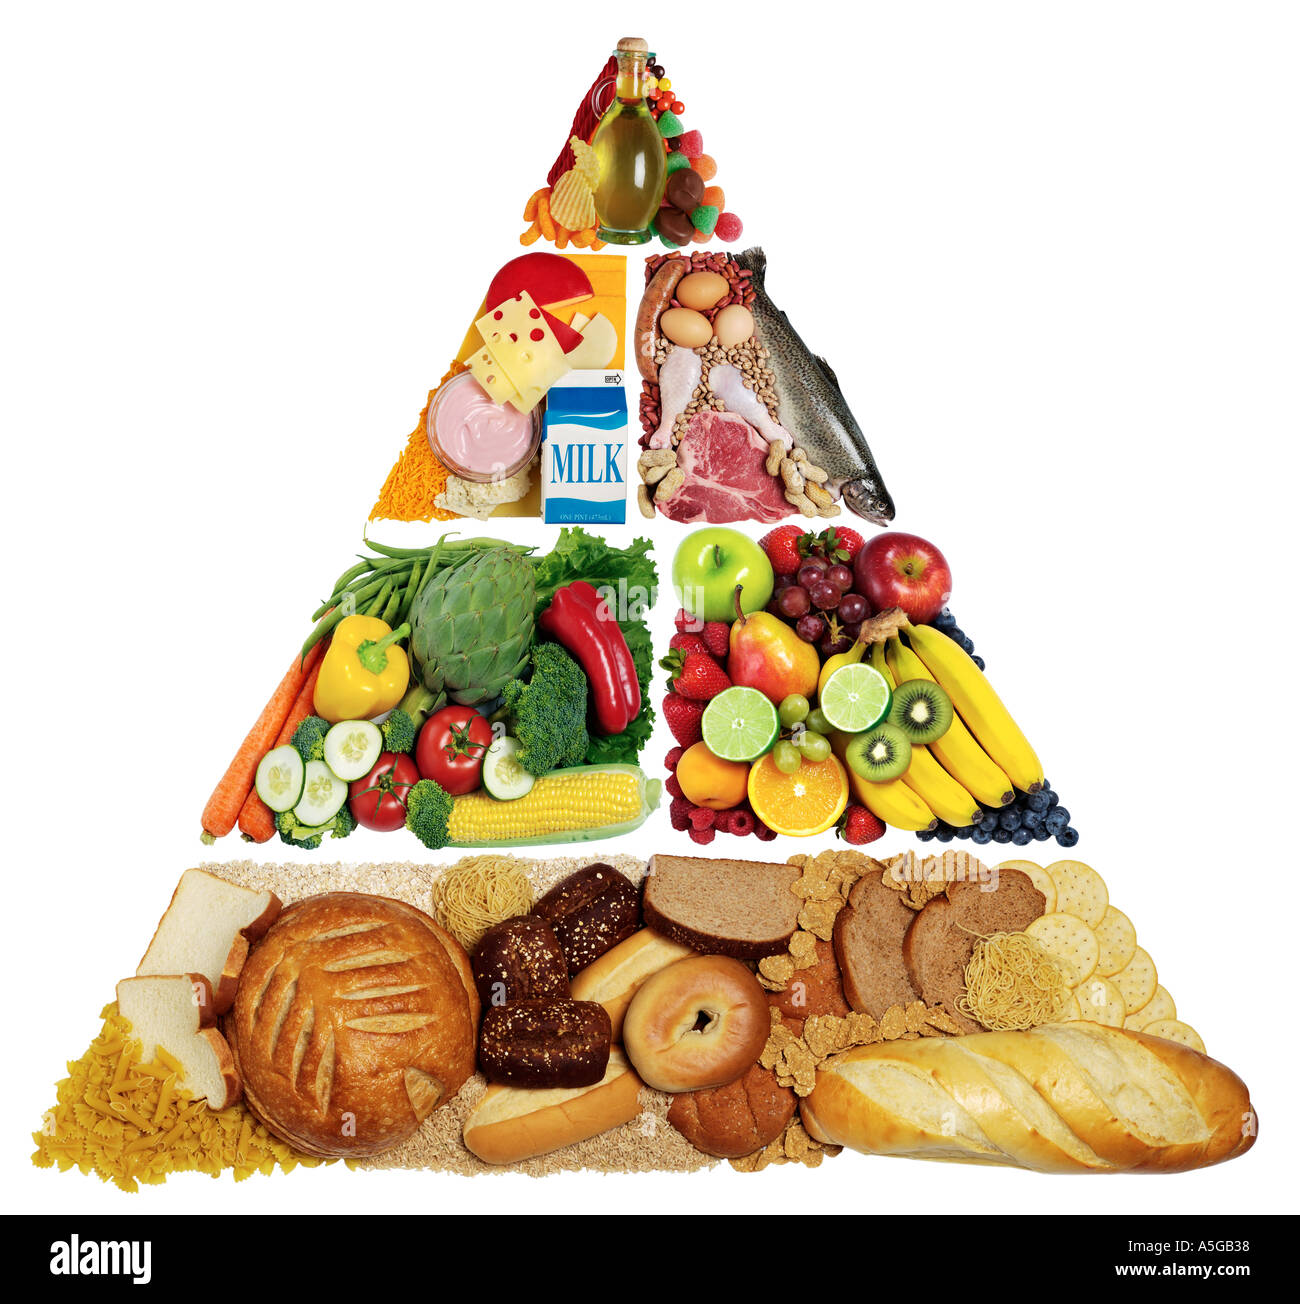 https://c8.alamy.com/comp/A5GB38/food-pyramid-A5GB38.jpg